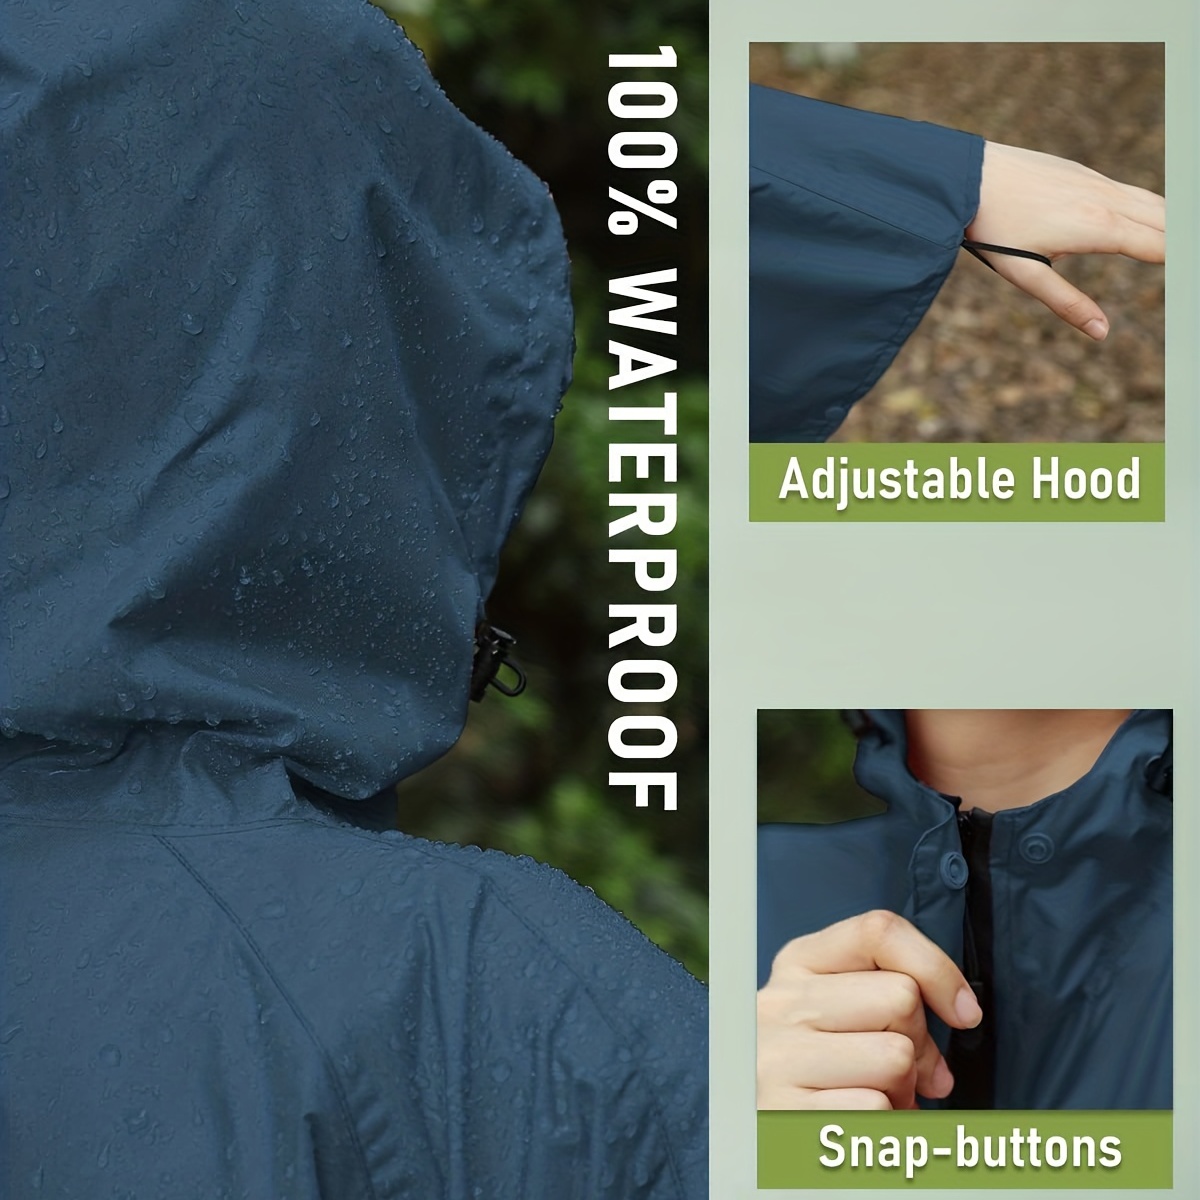 salamra Poncho de lluvia con capucha impermeable para  hombres/mujeres/adultos con bolsillo